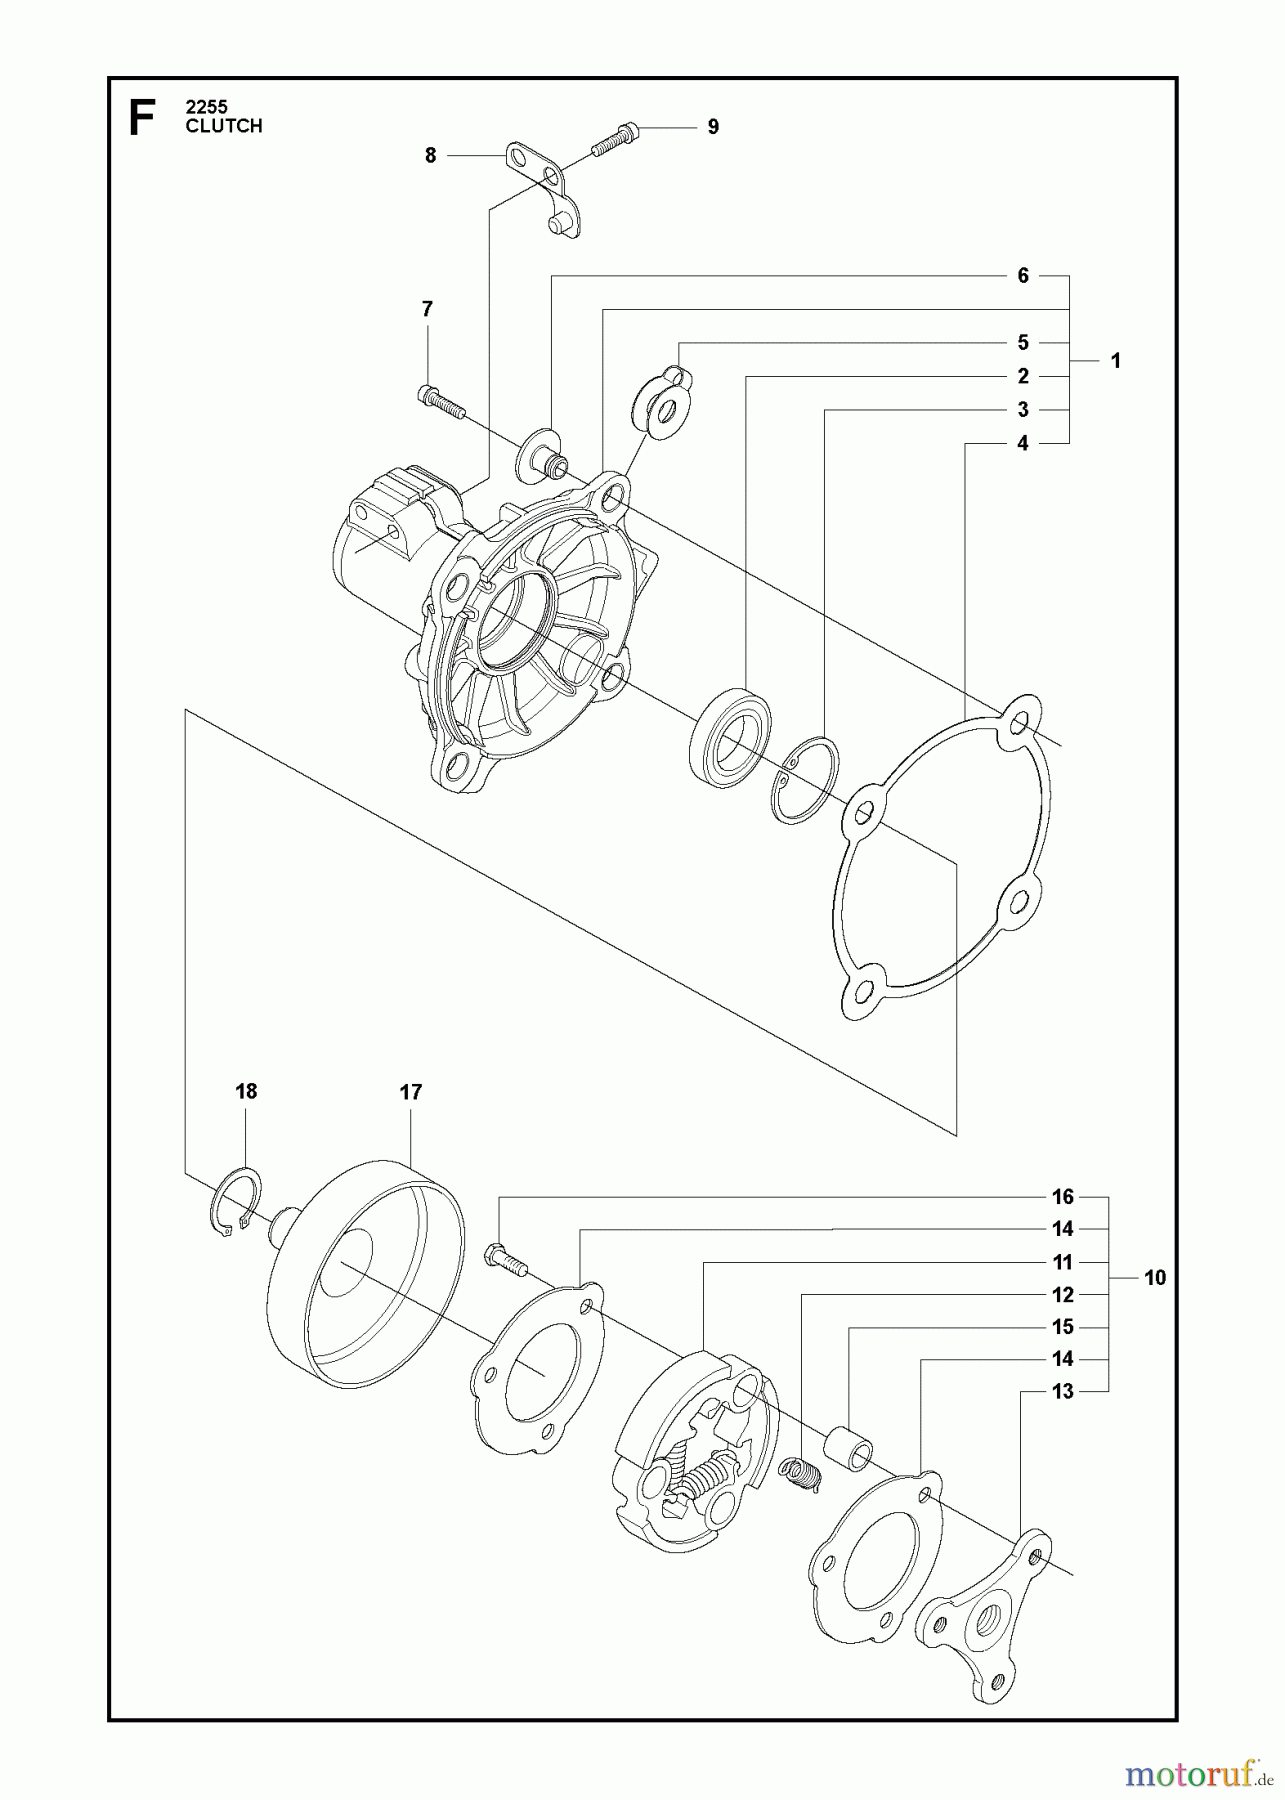  Jonsered Motorsensen, Trimmer FC2255 - Jonsered String/Brush Trimmer (2011-01) CLUTCH